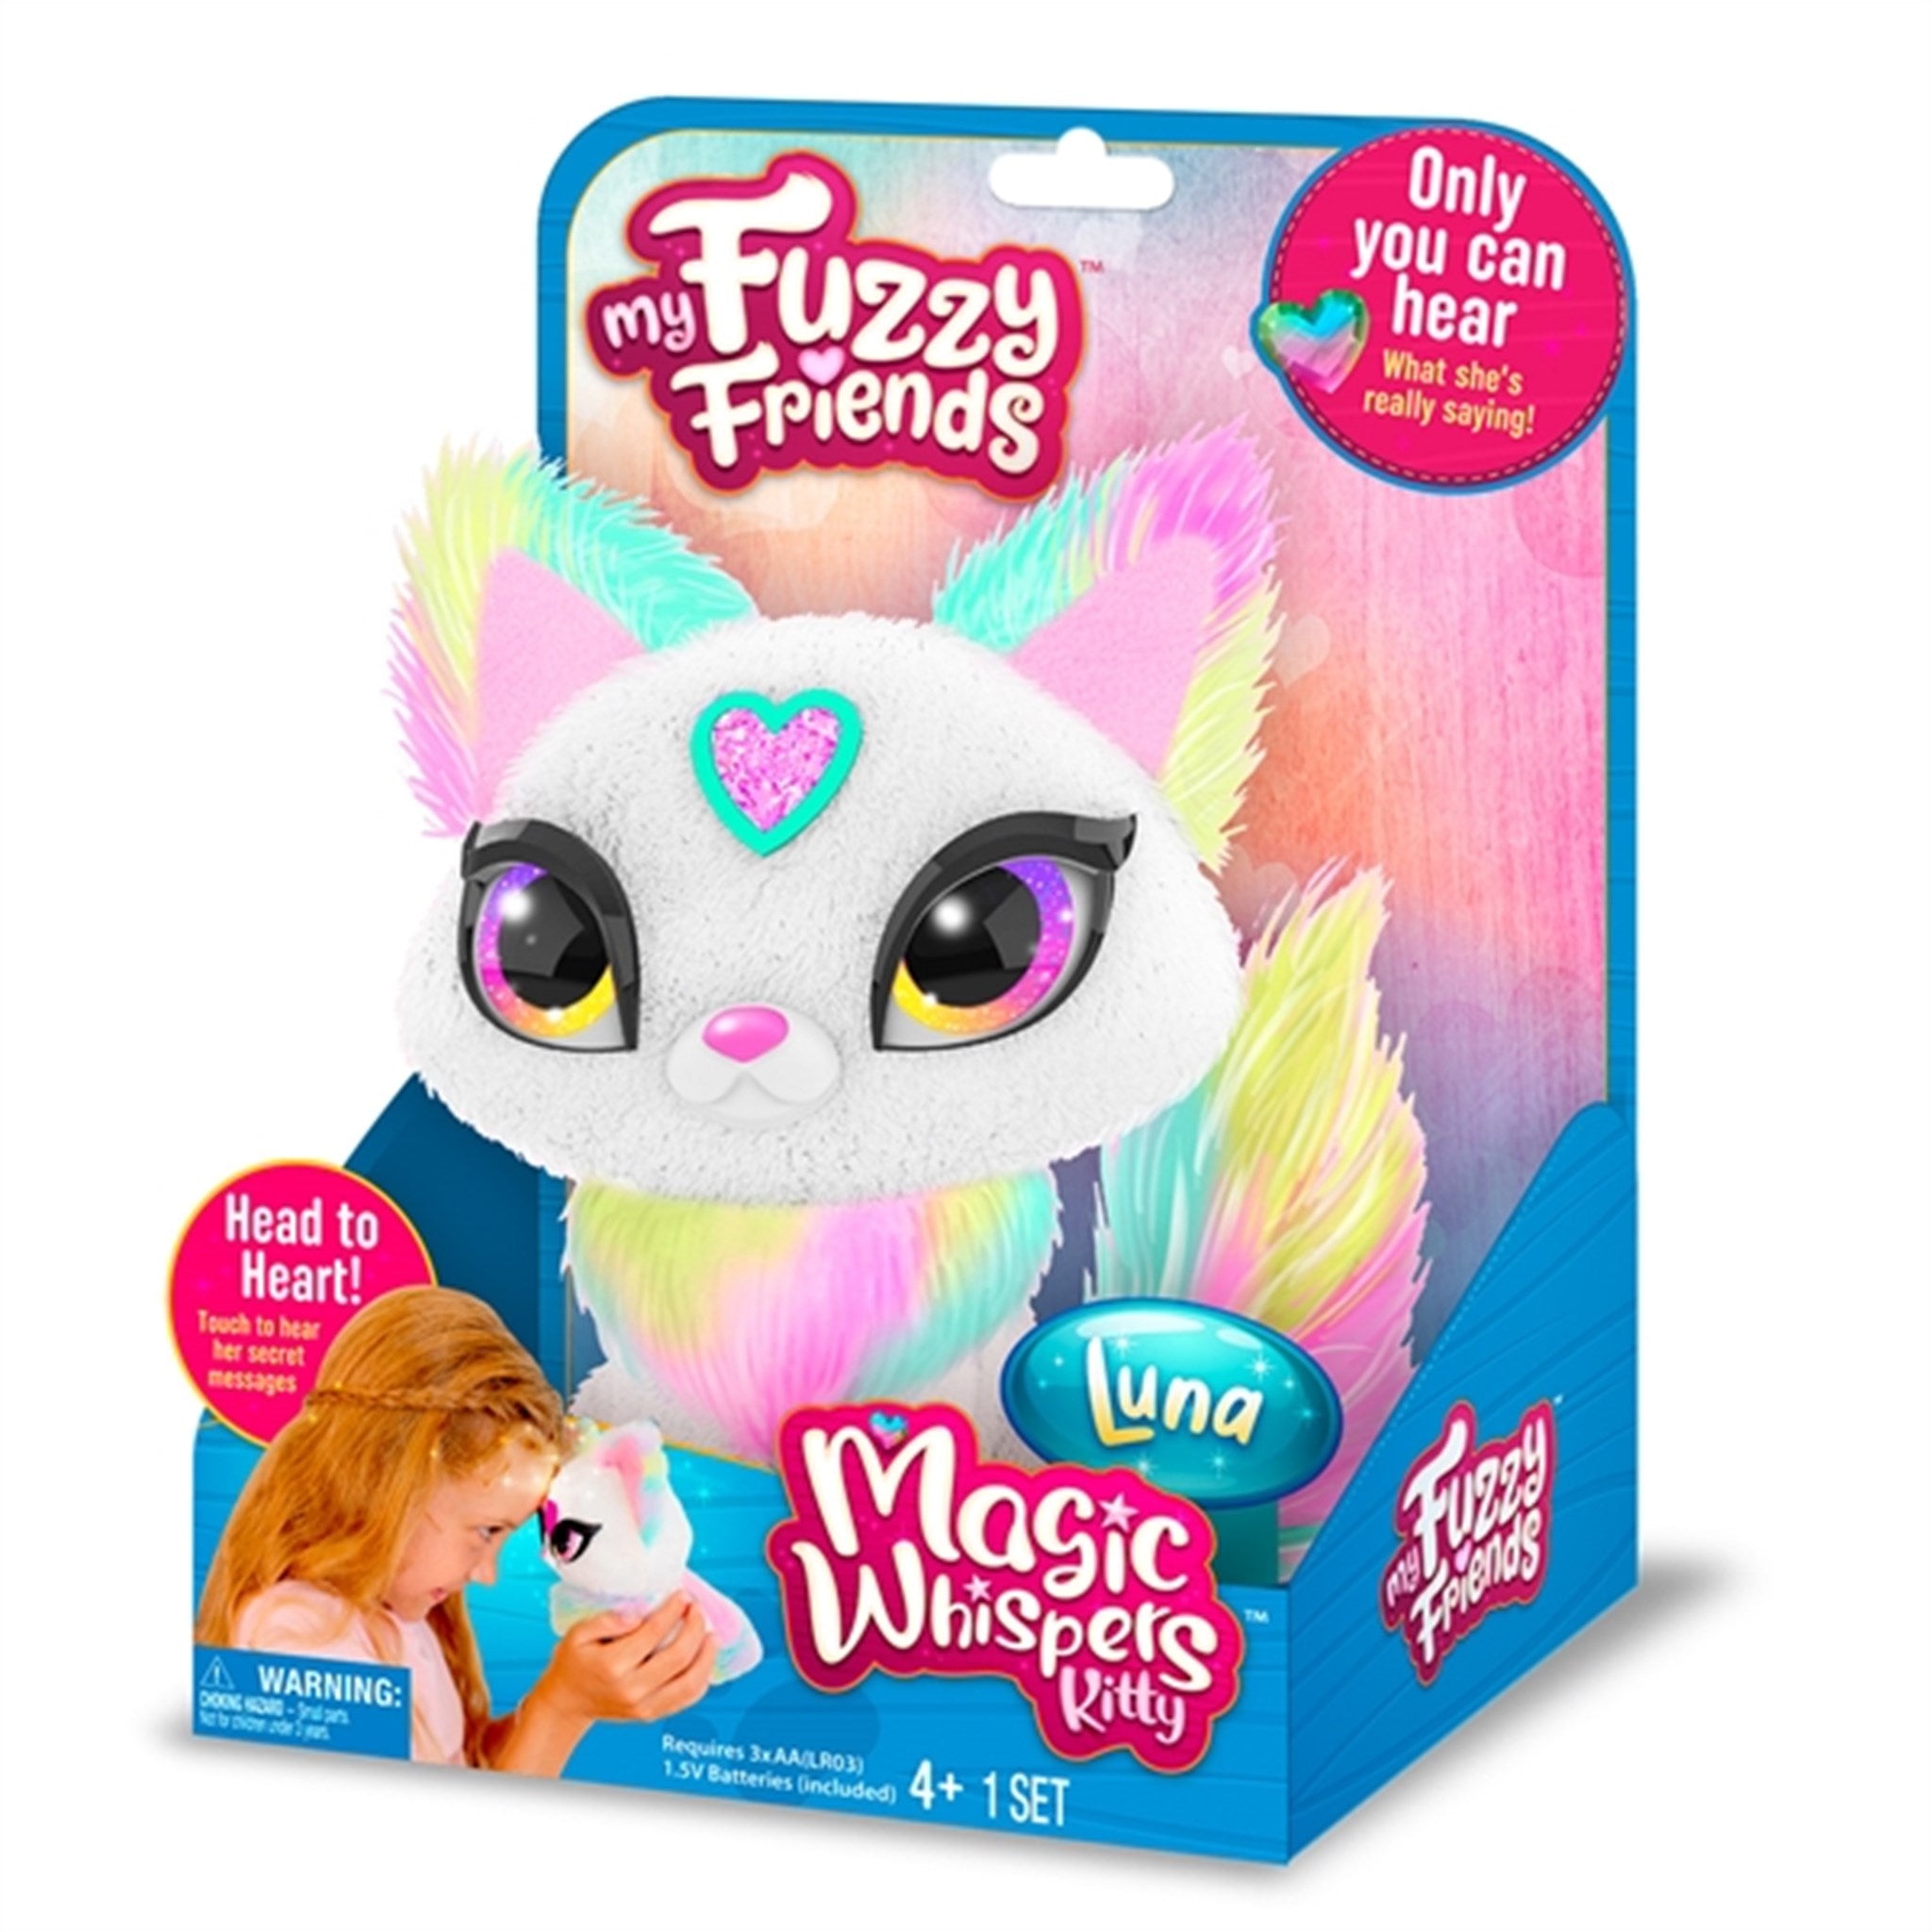 My Fuzzy Friends Whispers Kitty Luna White - Magic Mixies